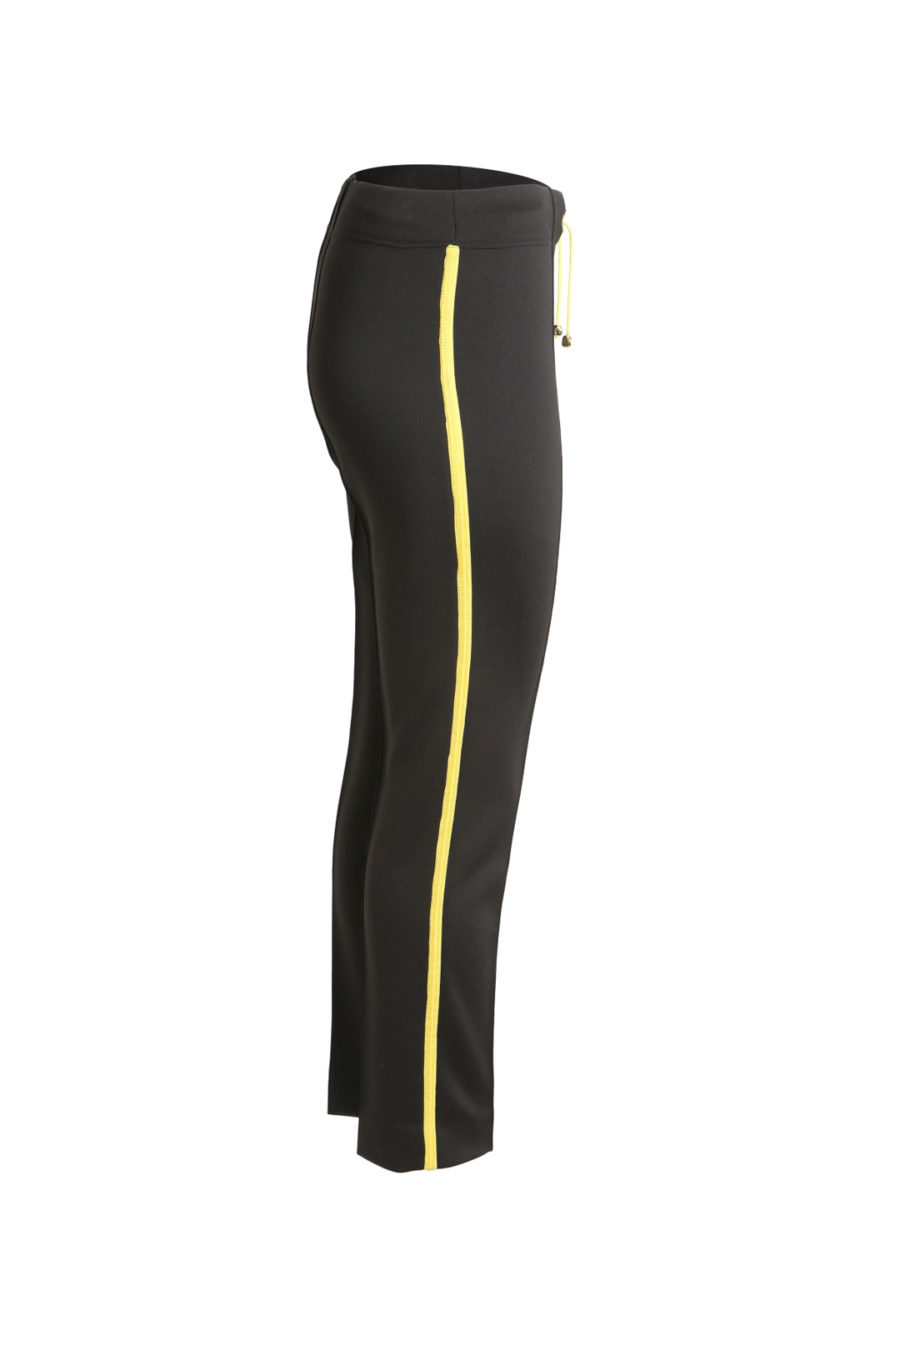 Classic logo pants, black-yellow